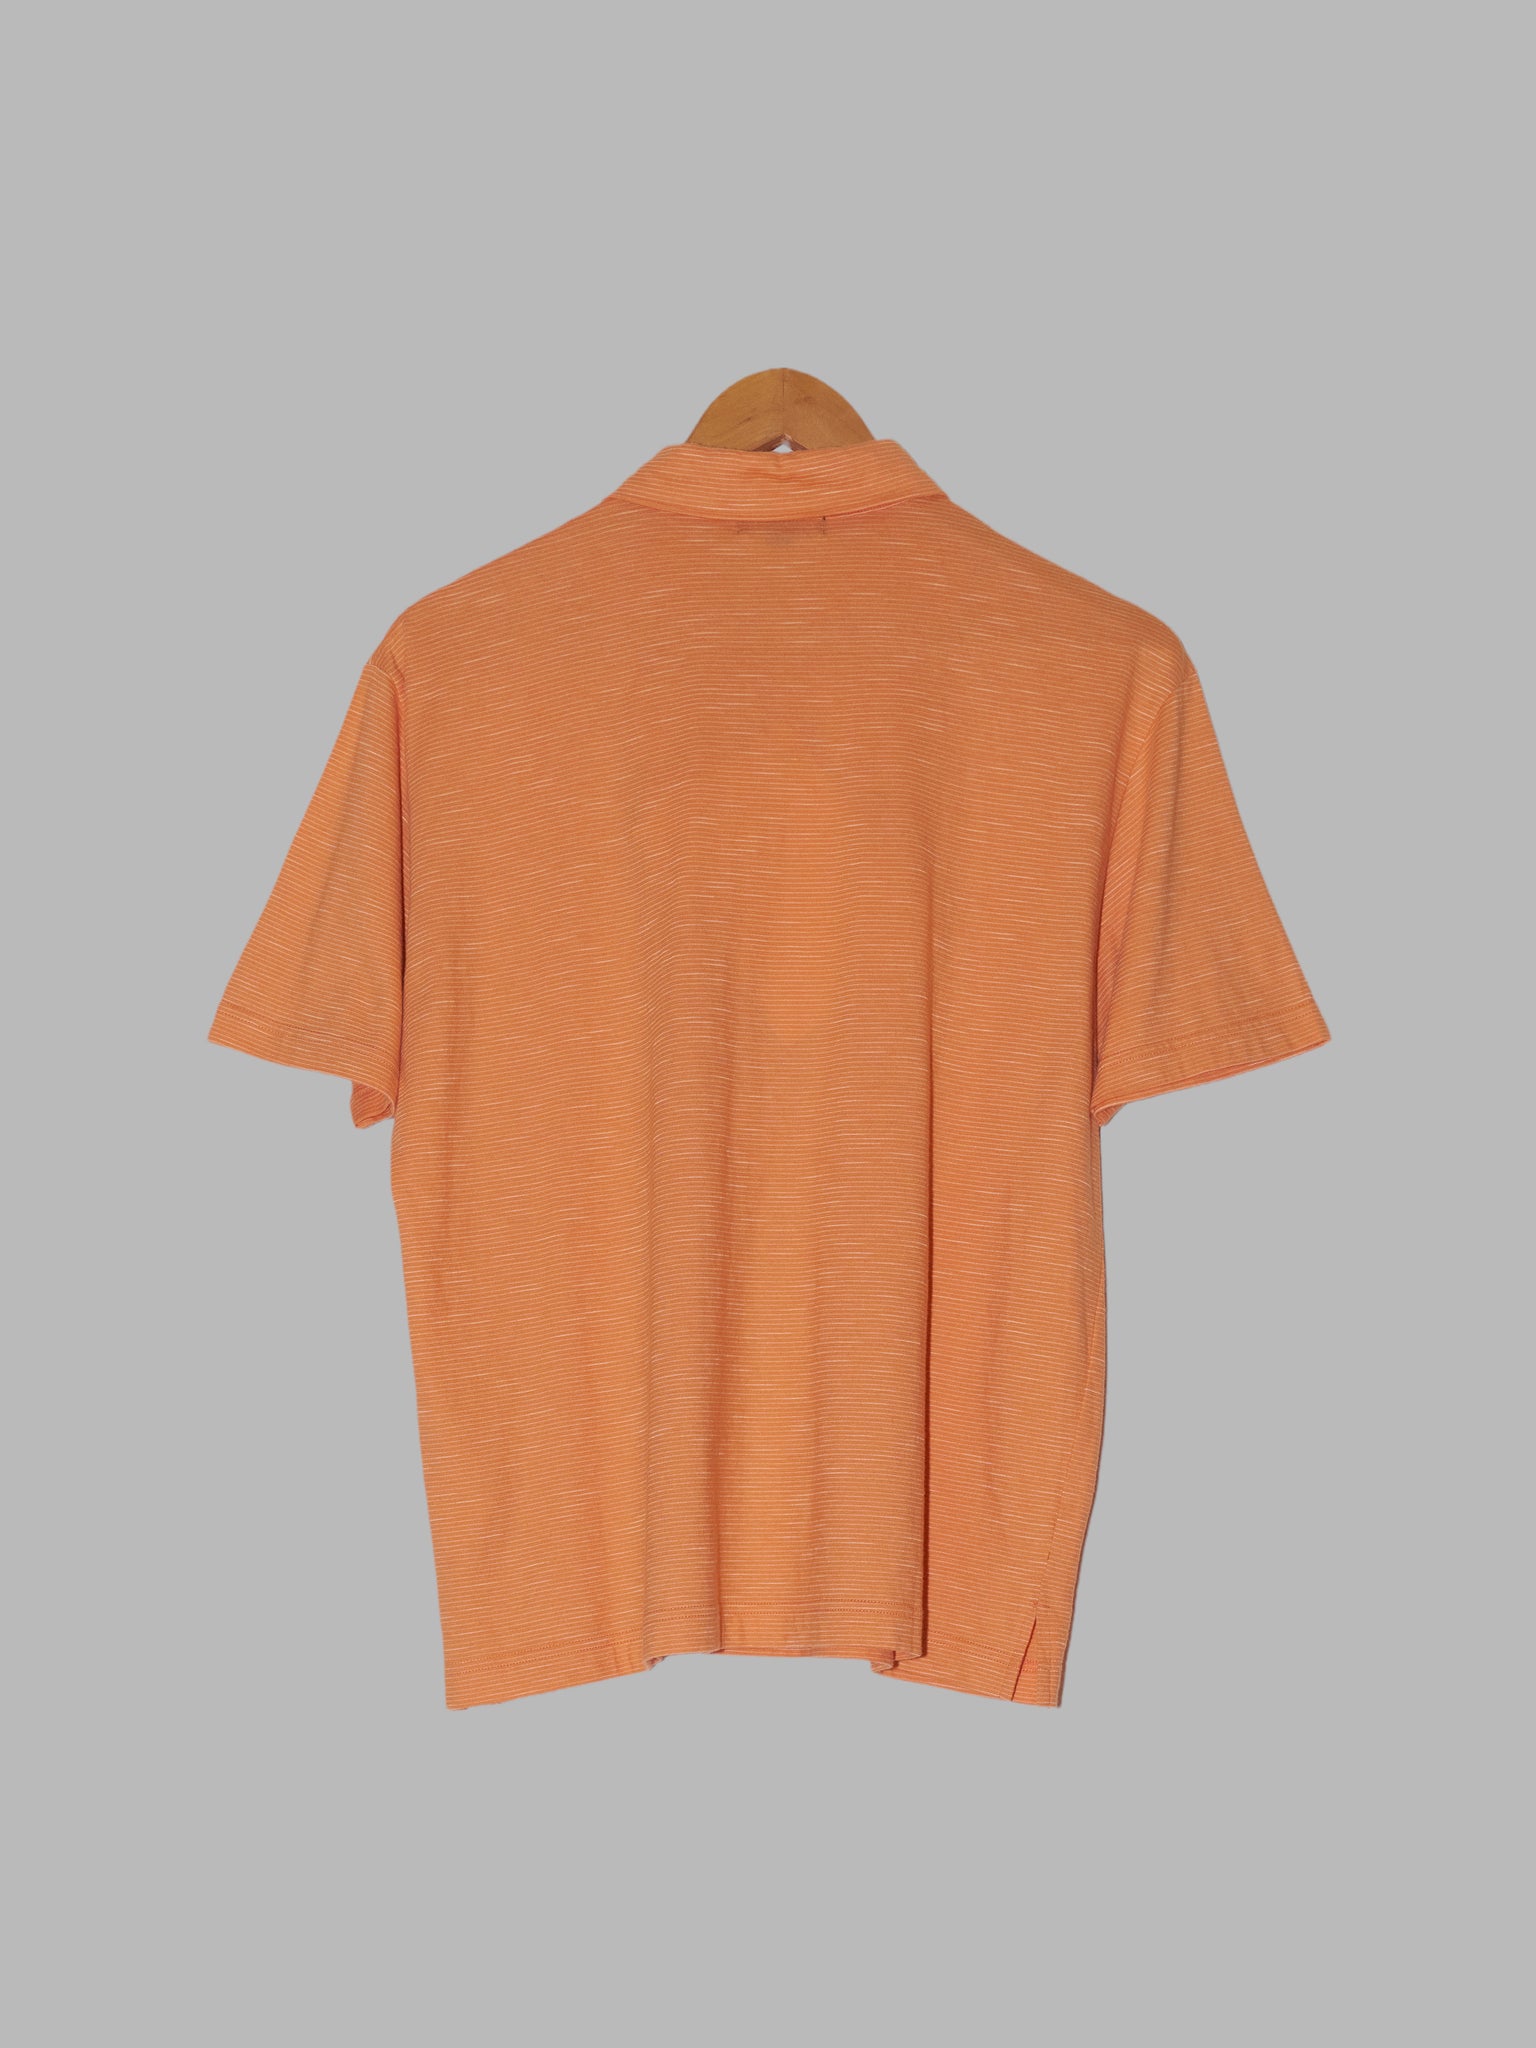 Allegri orange cotton jersey zip neck polo shirt - size 48